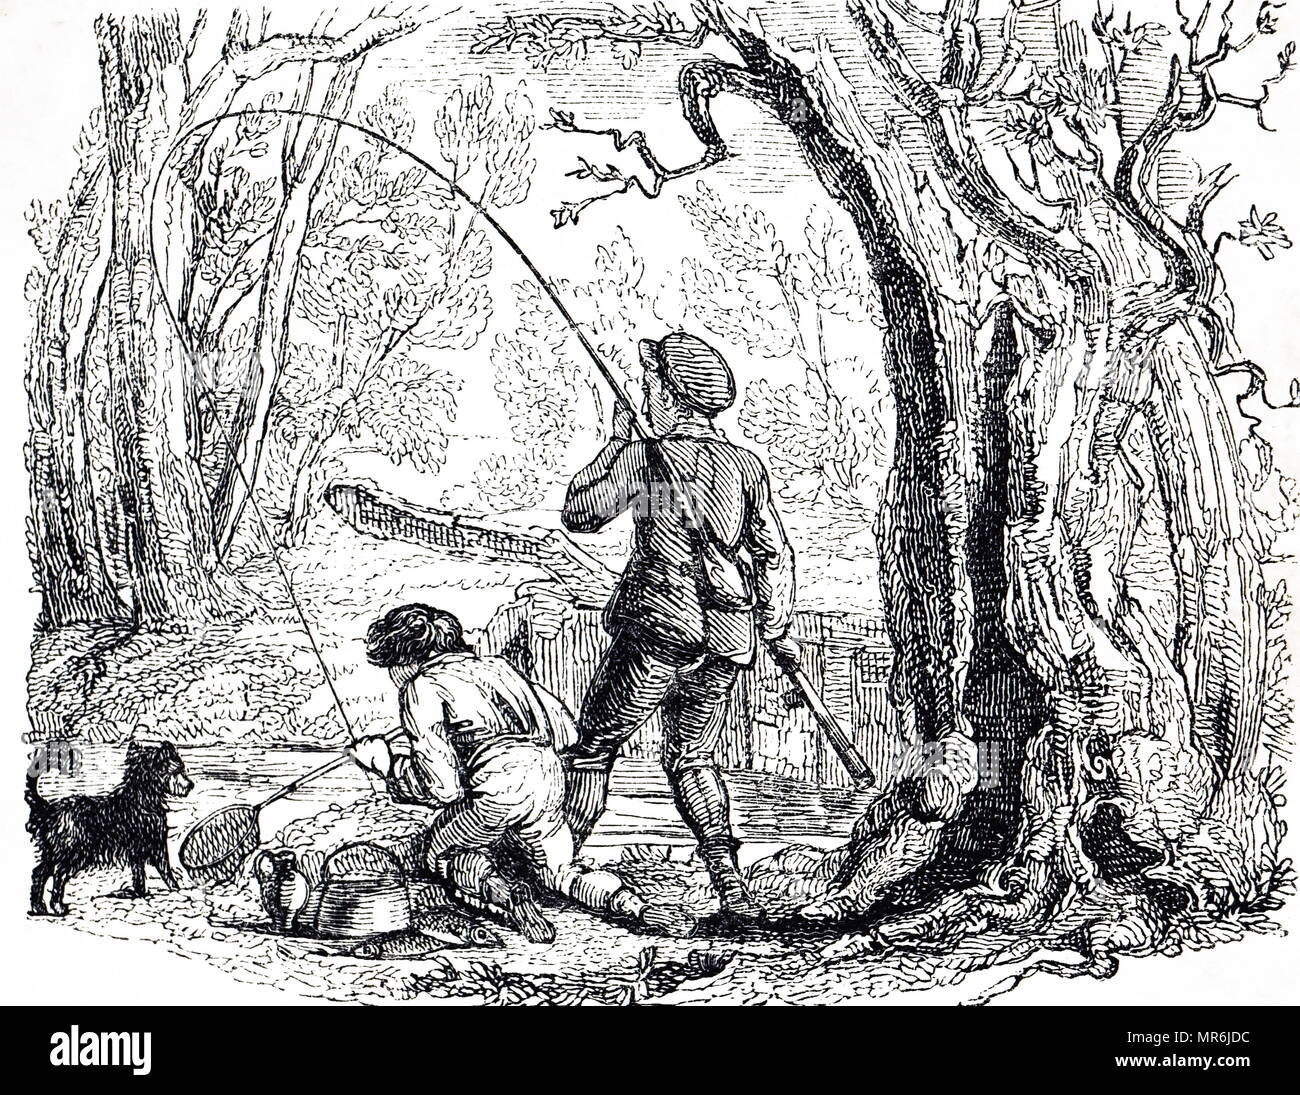 https://c8.alamy.com/comp/MR6JDC/illustration-depicting-young-boys-fishing-dated-19th-century-MR6JDC.jpg